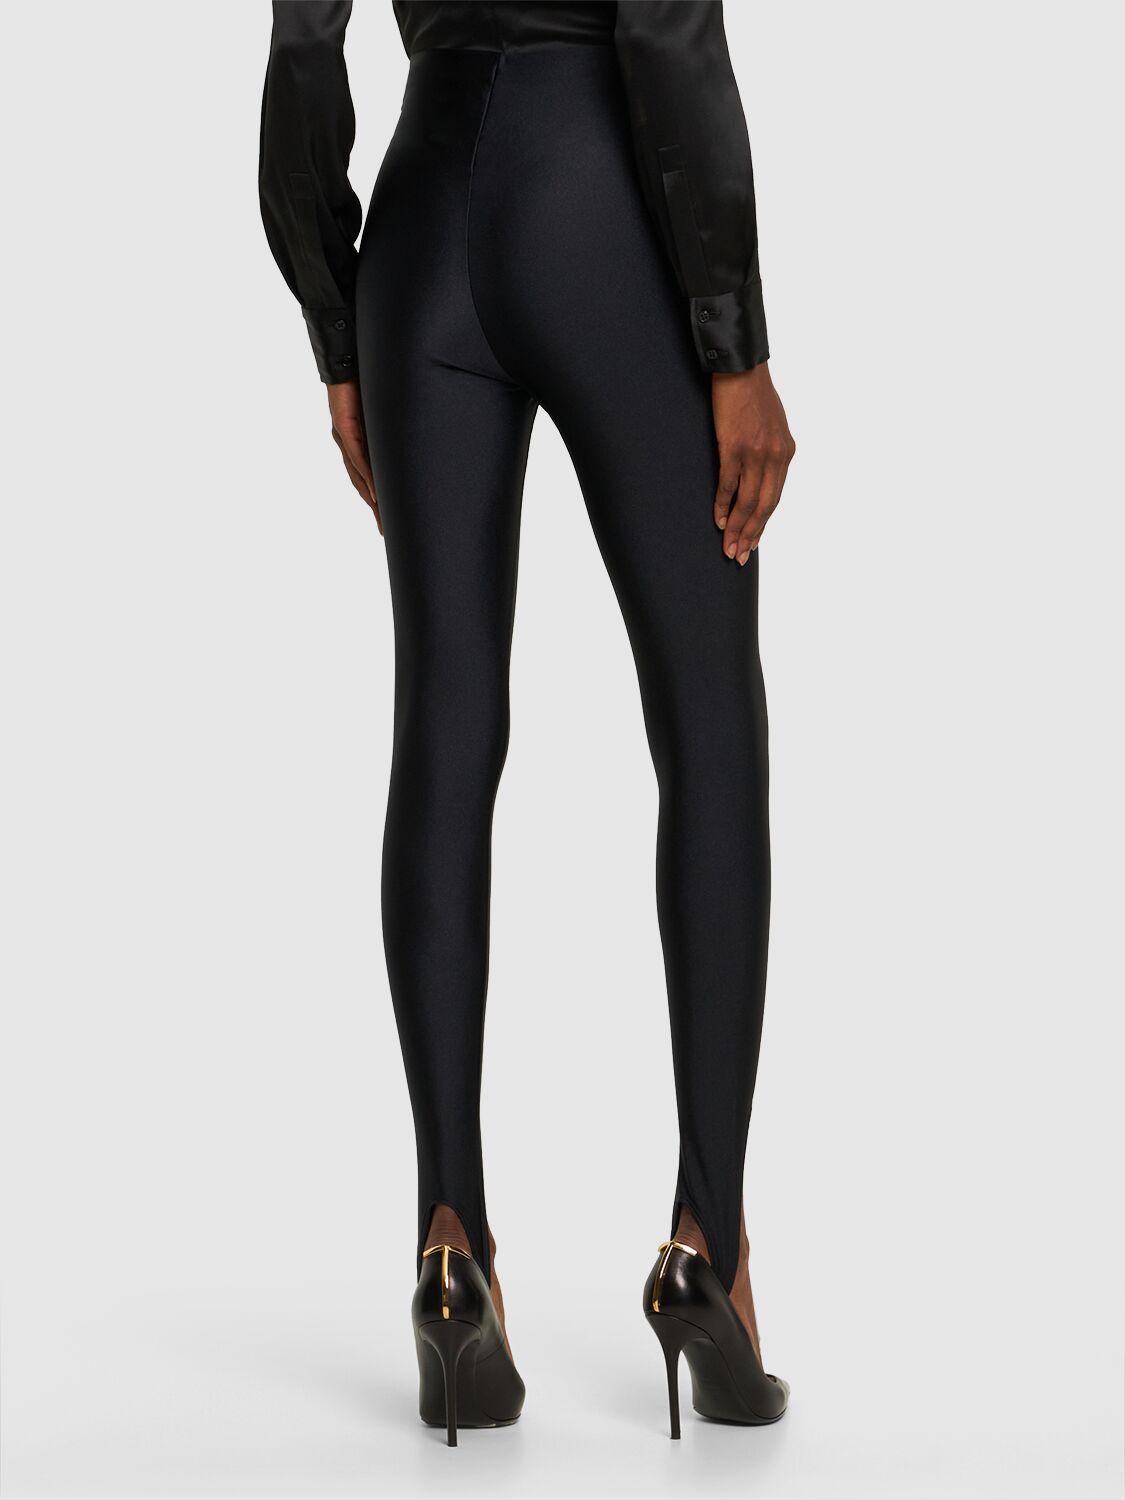 https://cdna.lystit.com/photos/lvr/d5e5b9cb/the-andamane-Black-New-Holly-80s-Shiny-Lycra-leggings.jpeg